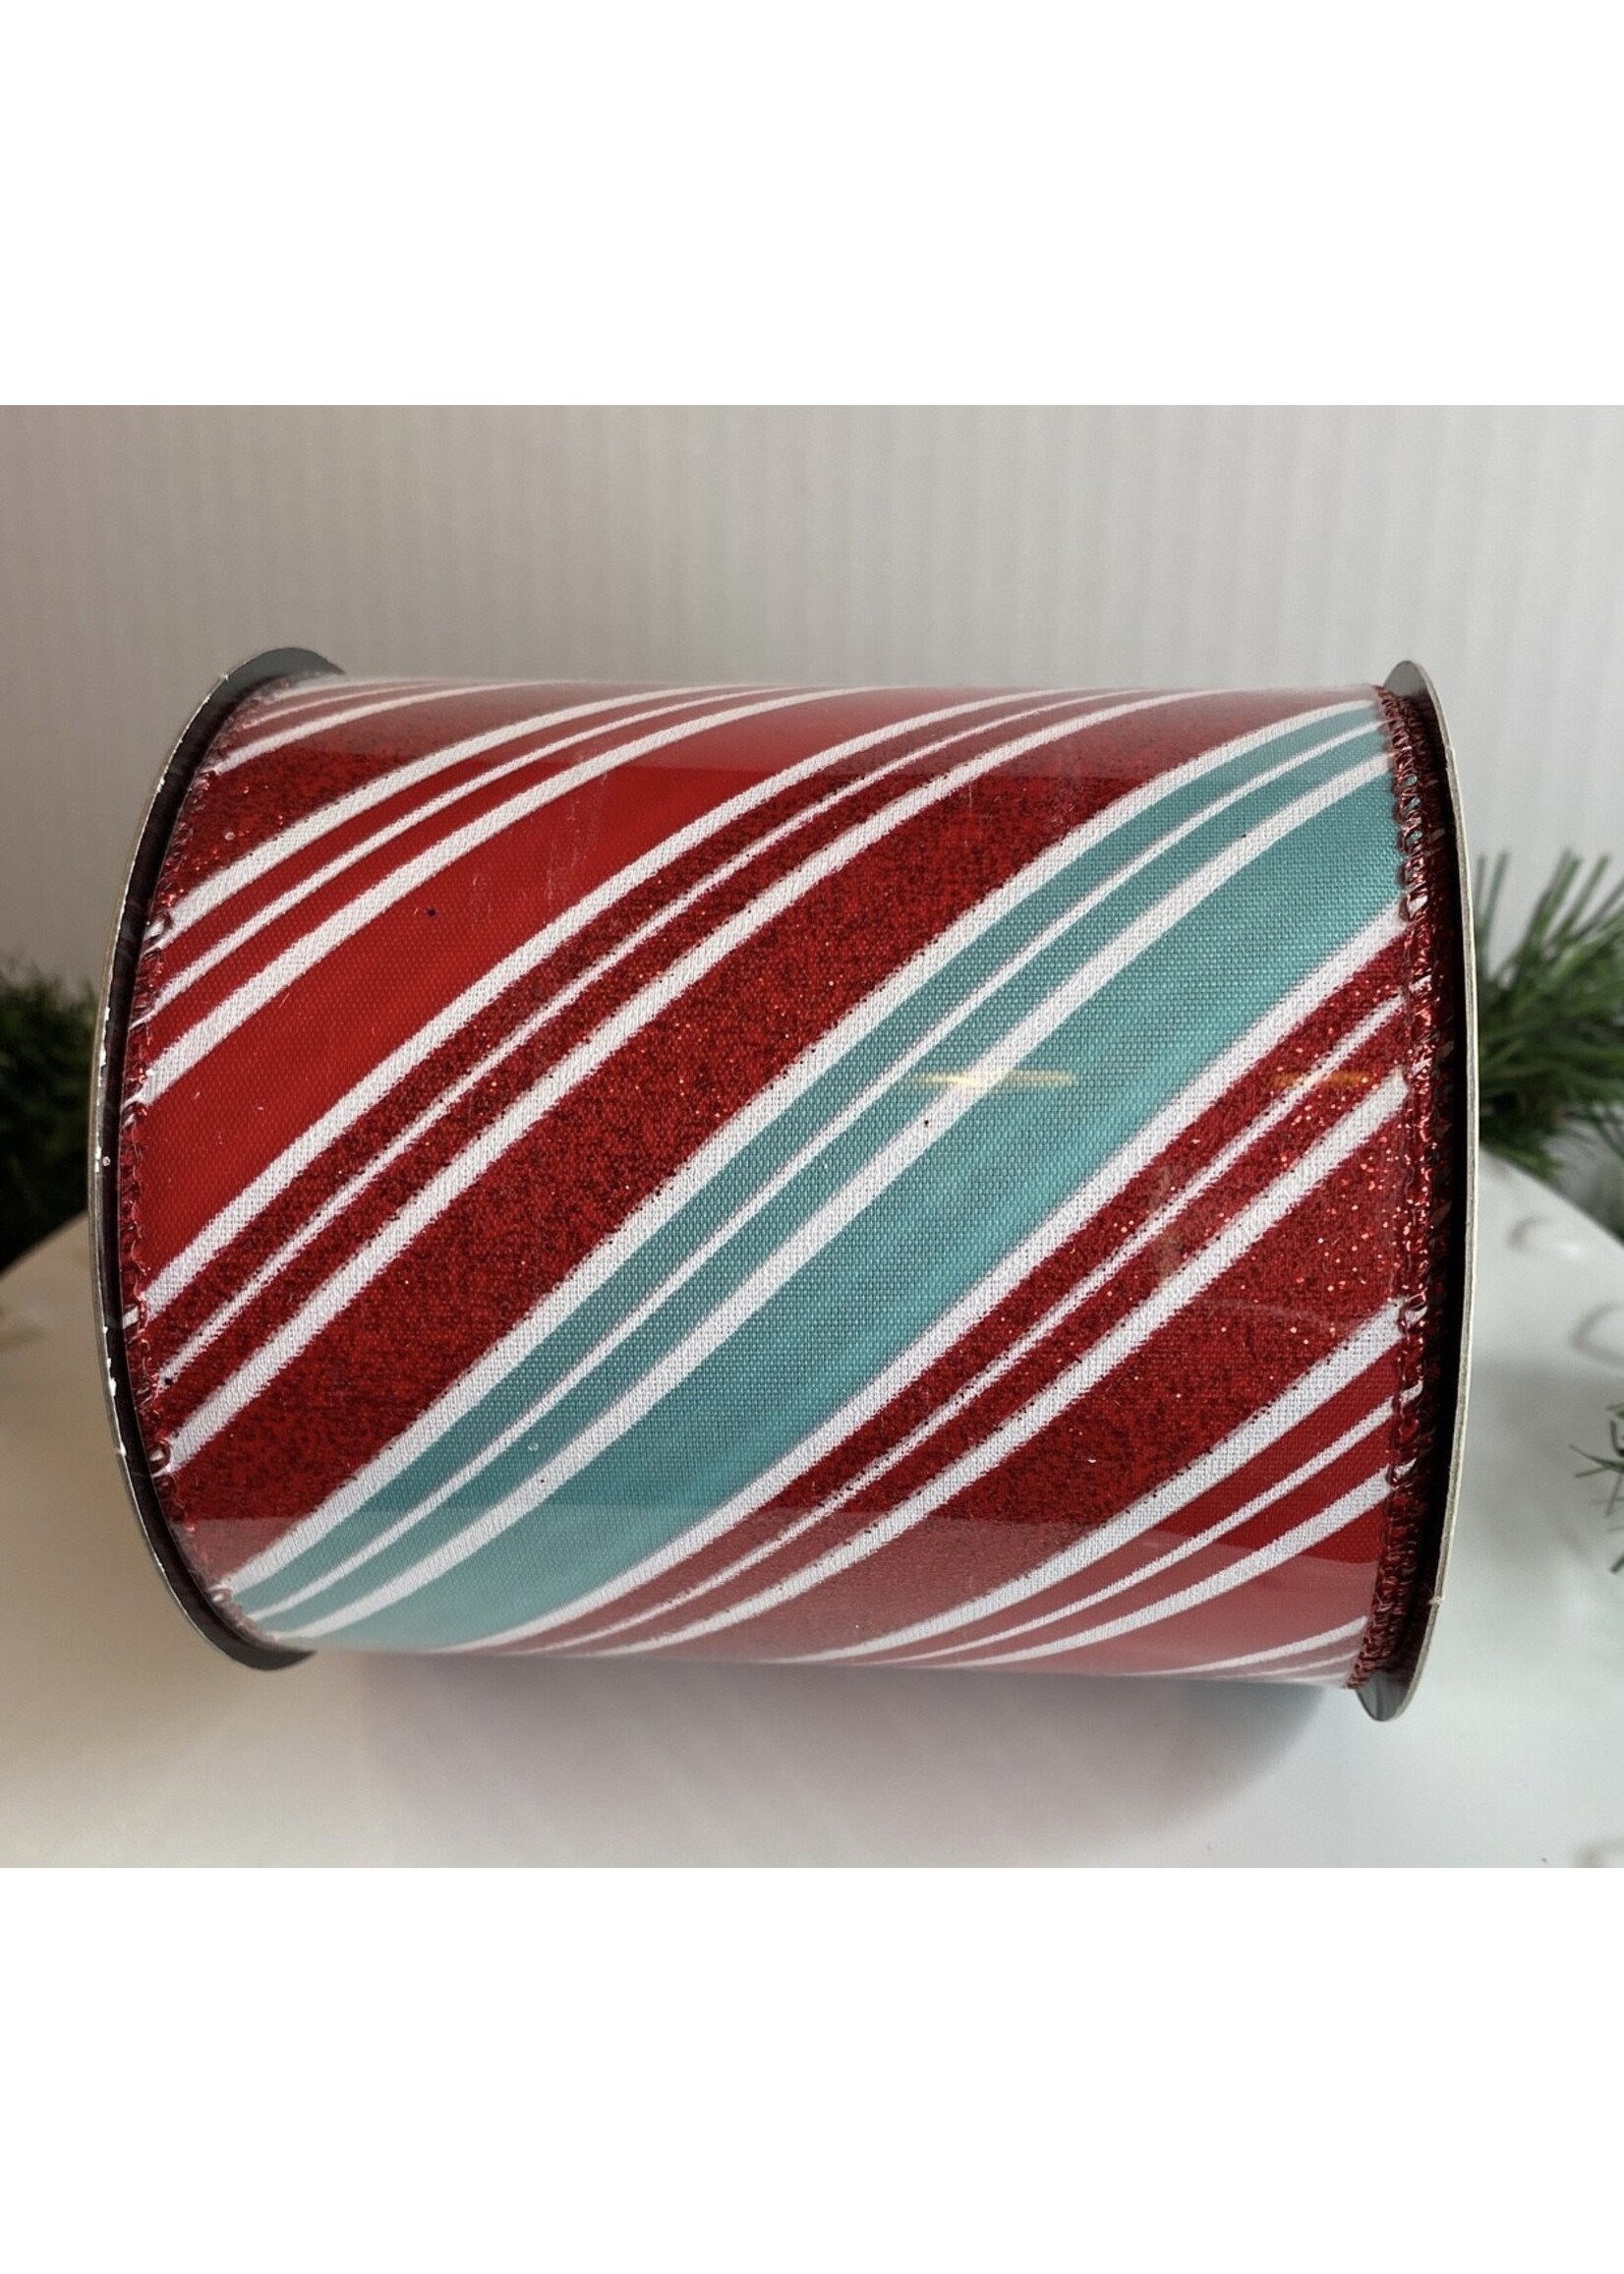 D. Stevens Fine Ribbons 4" x 10yds Satin Red Glitter, Blue and White Stripe Candy Cane Ribbon